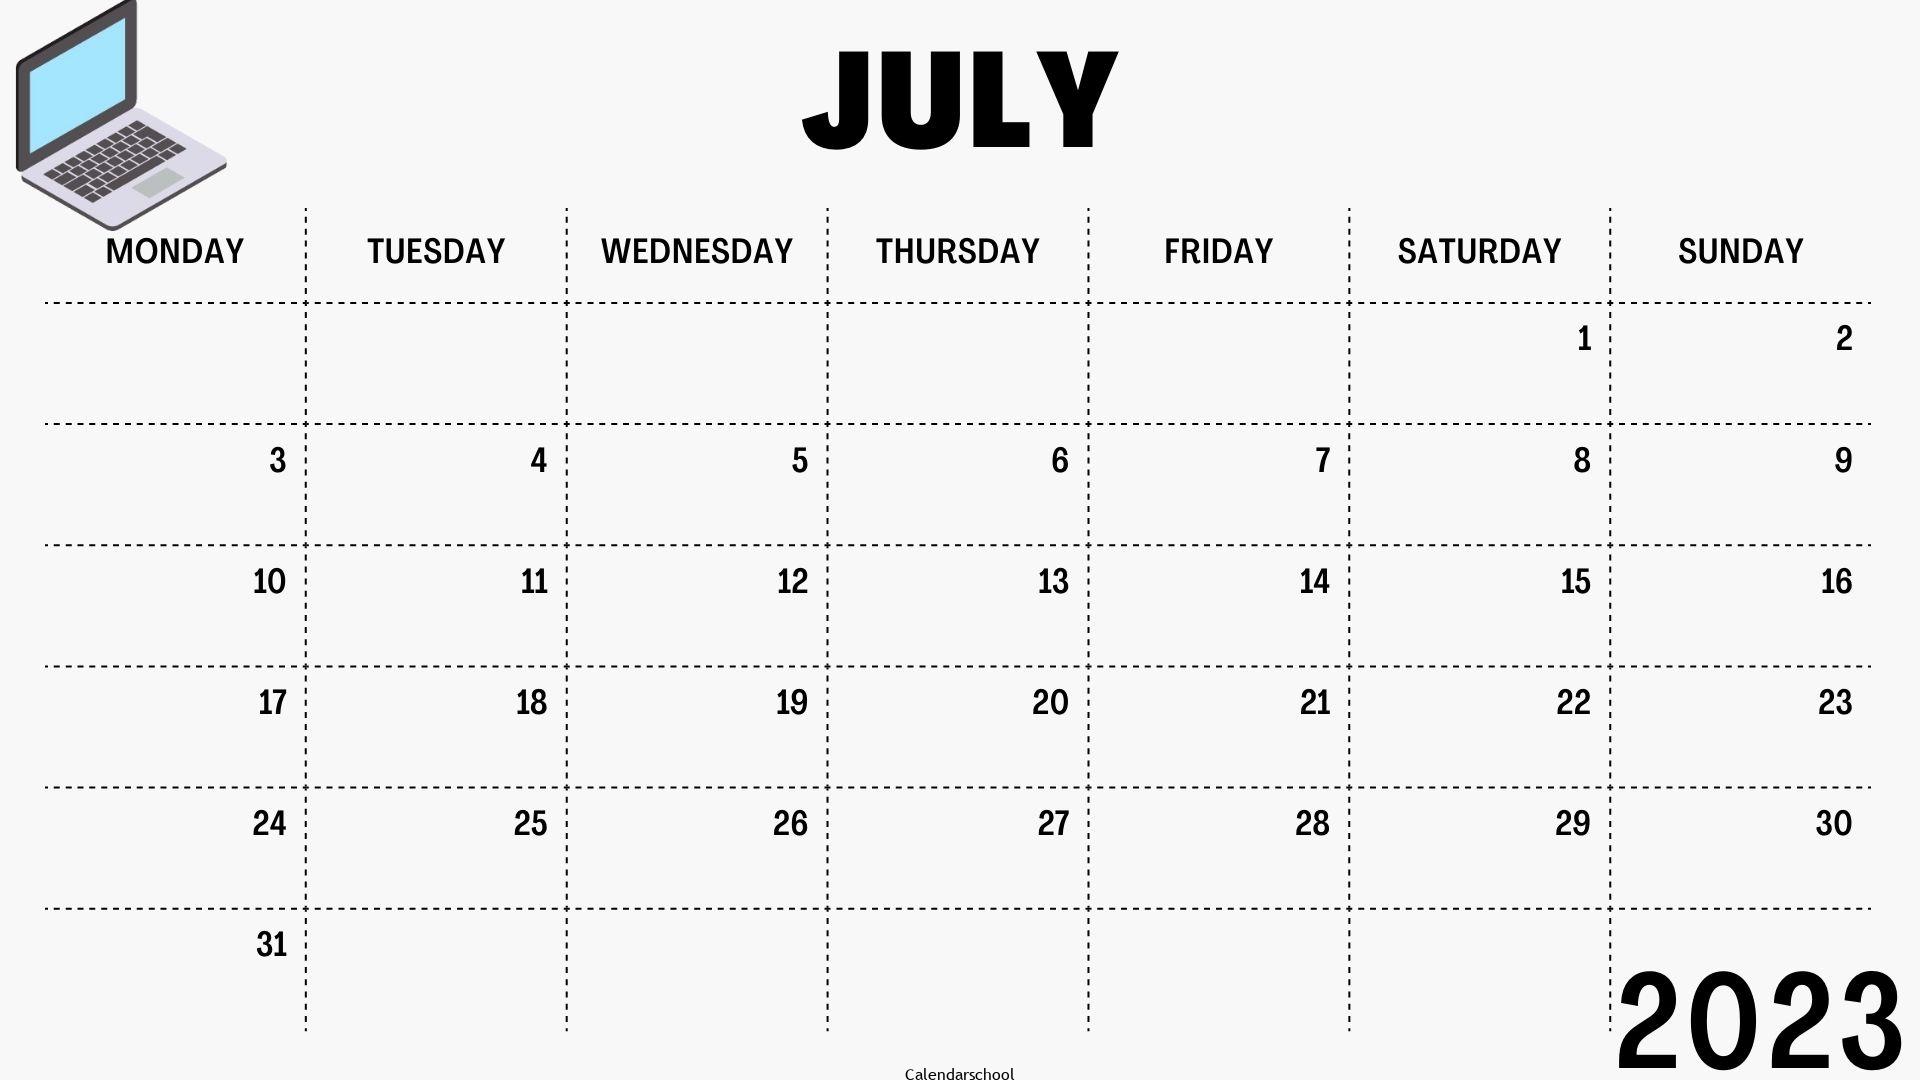 July Calendar 2023 Design Template